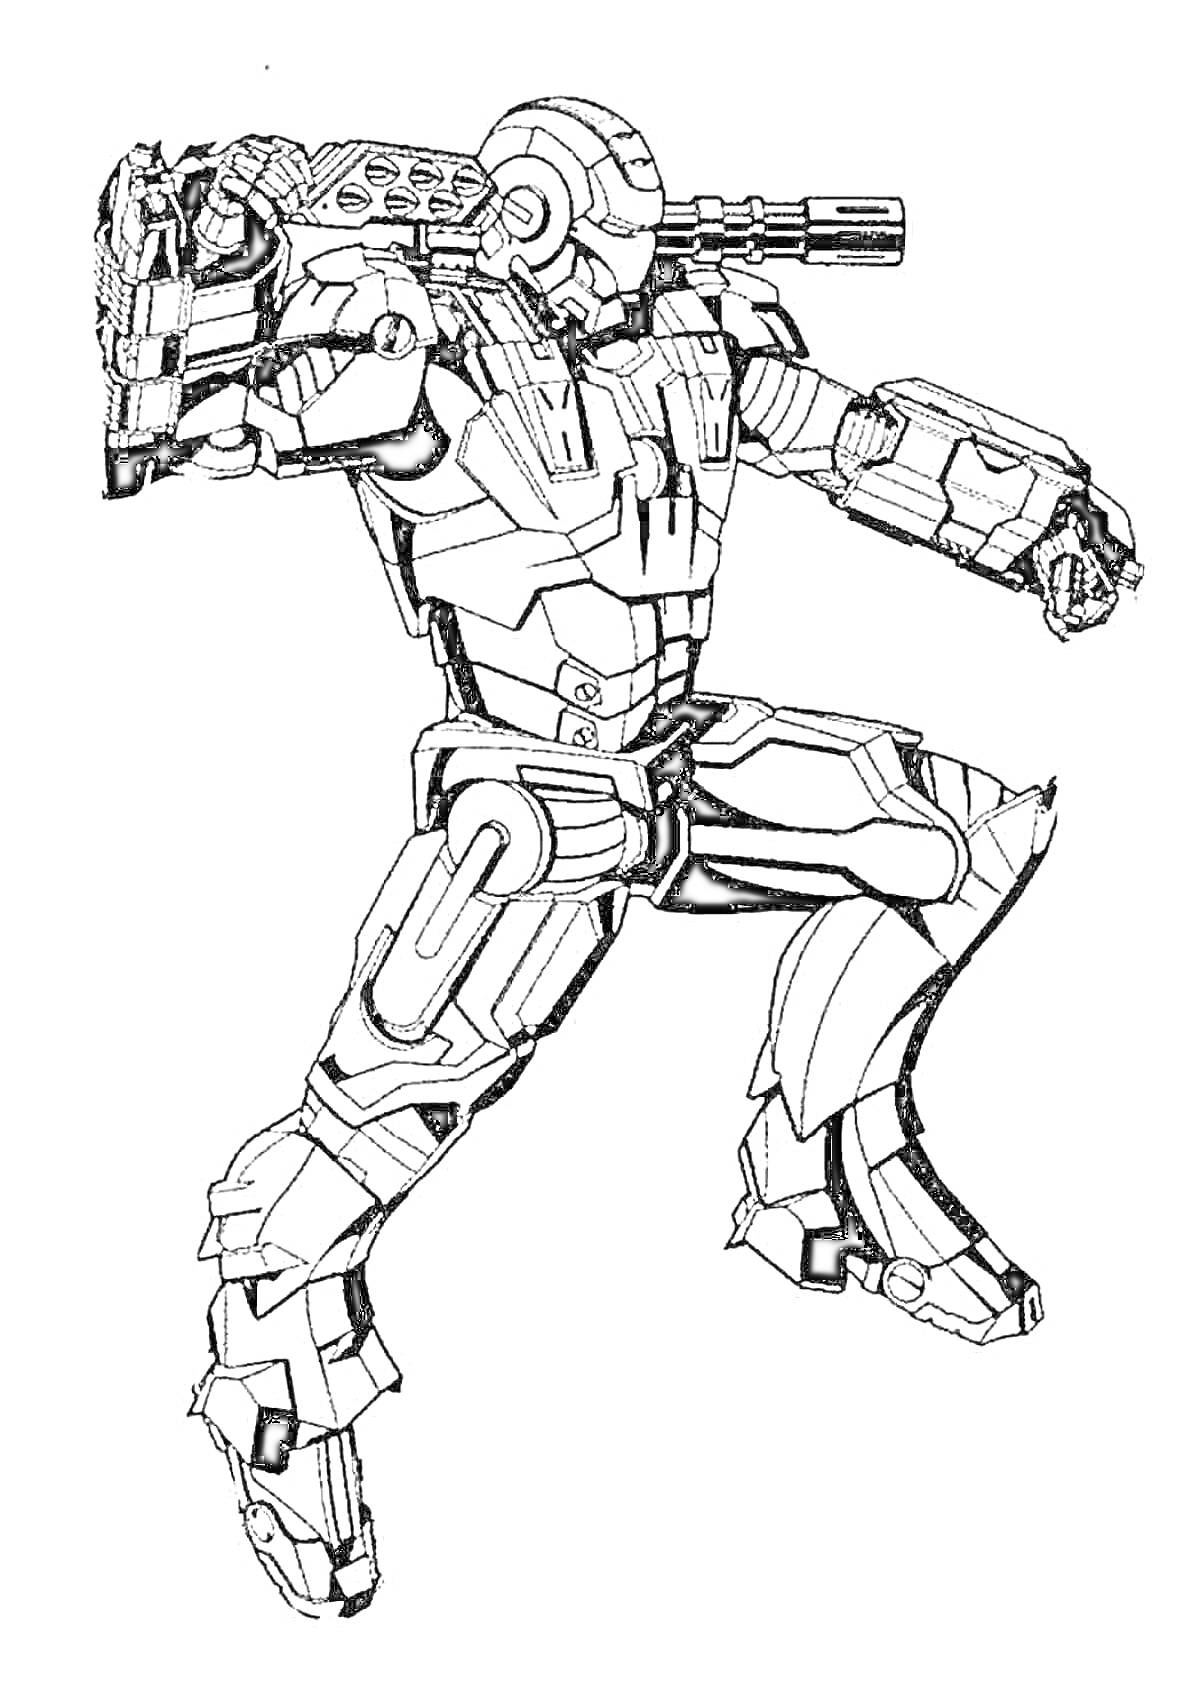 Раскраска Воин в экзо-костюме с лазерной пушкой на плече